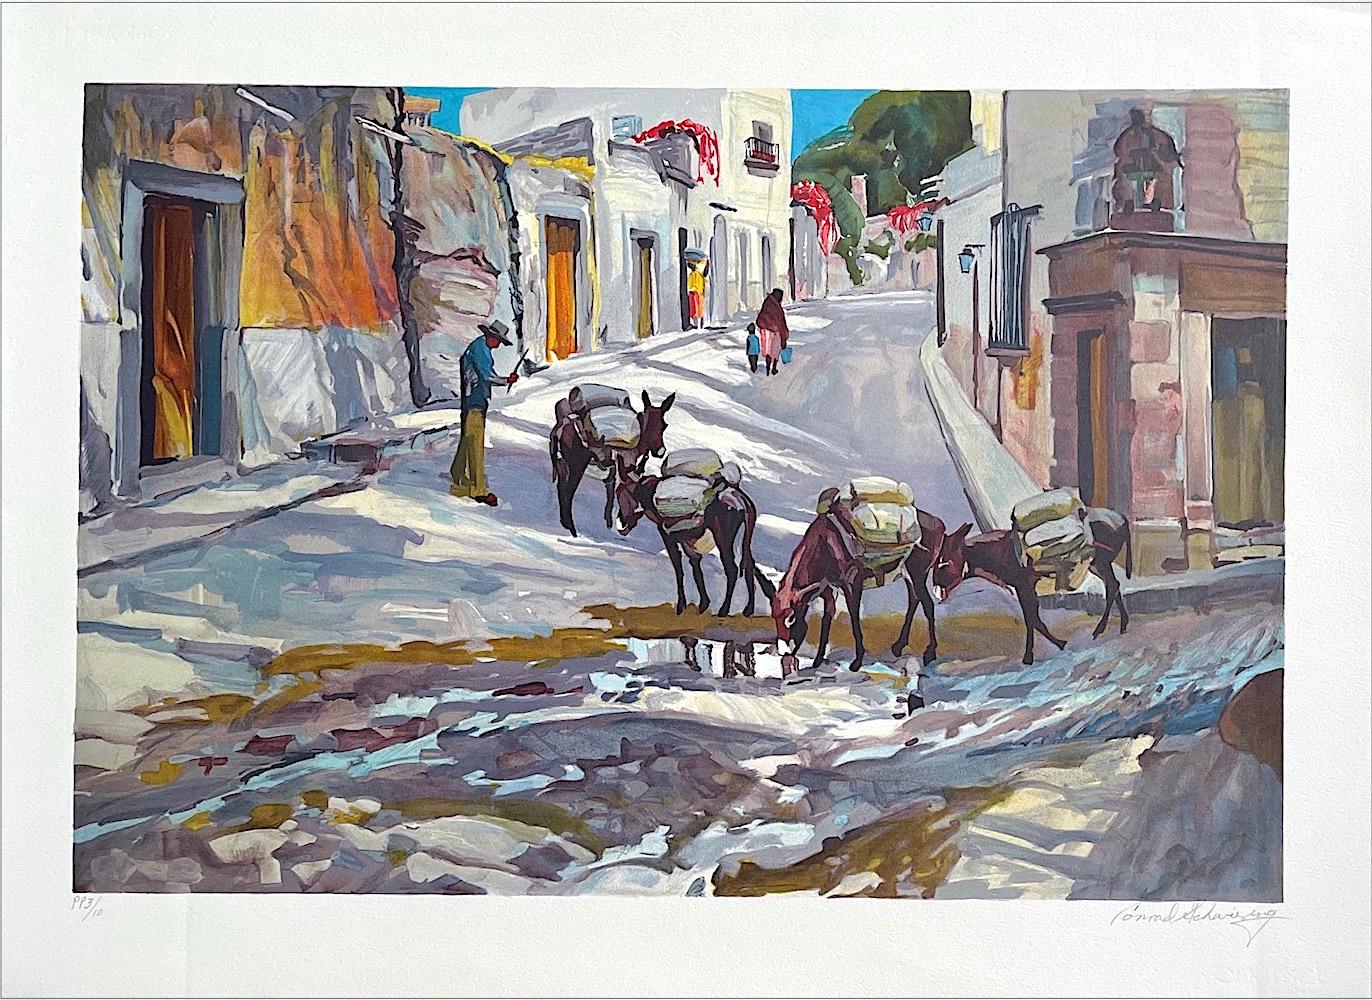 Conrad Schwiering Landscape Print - BURRO EXPRESS Signed Lithograph Street Scene Villagers, Donkeys, Southwest Art